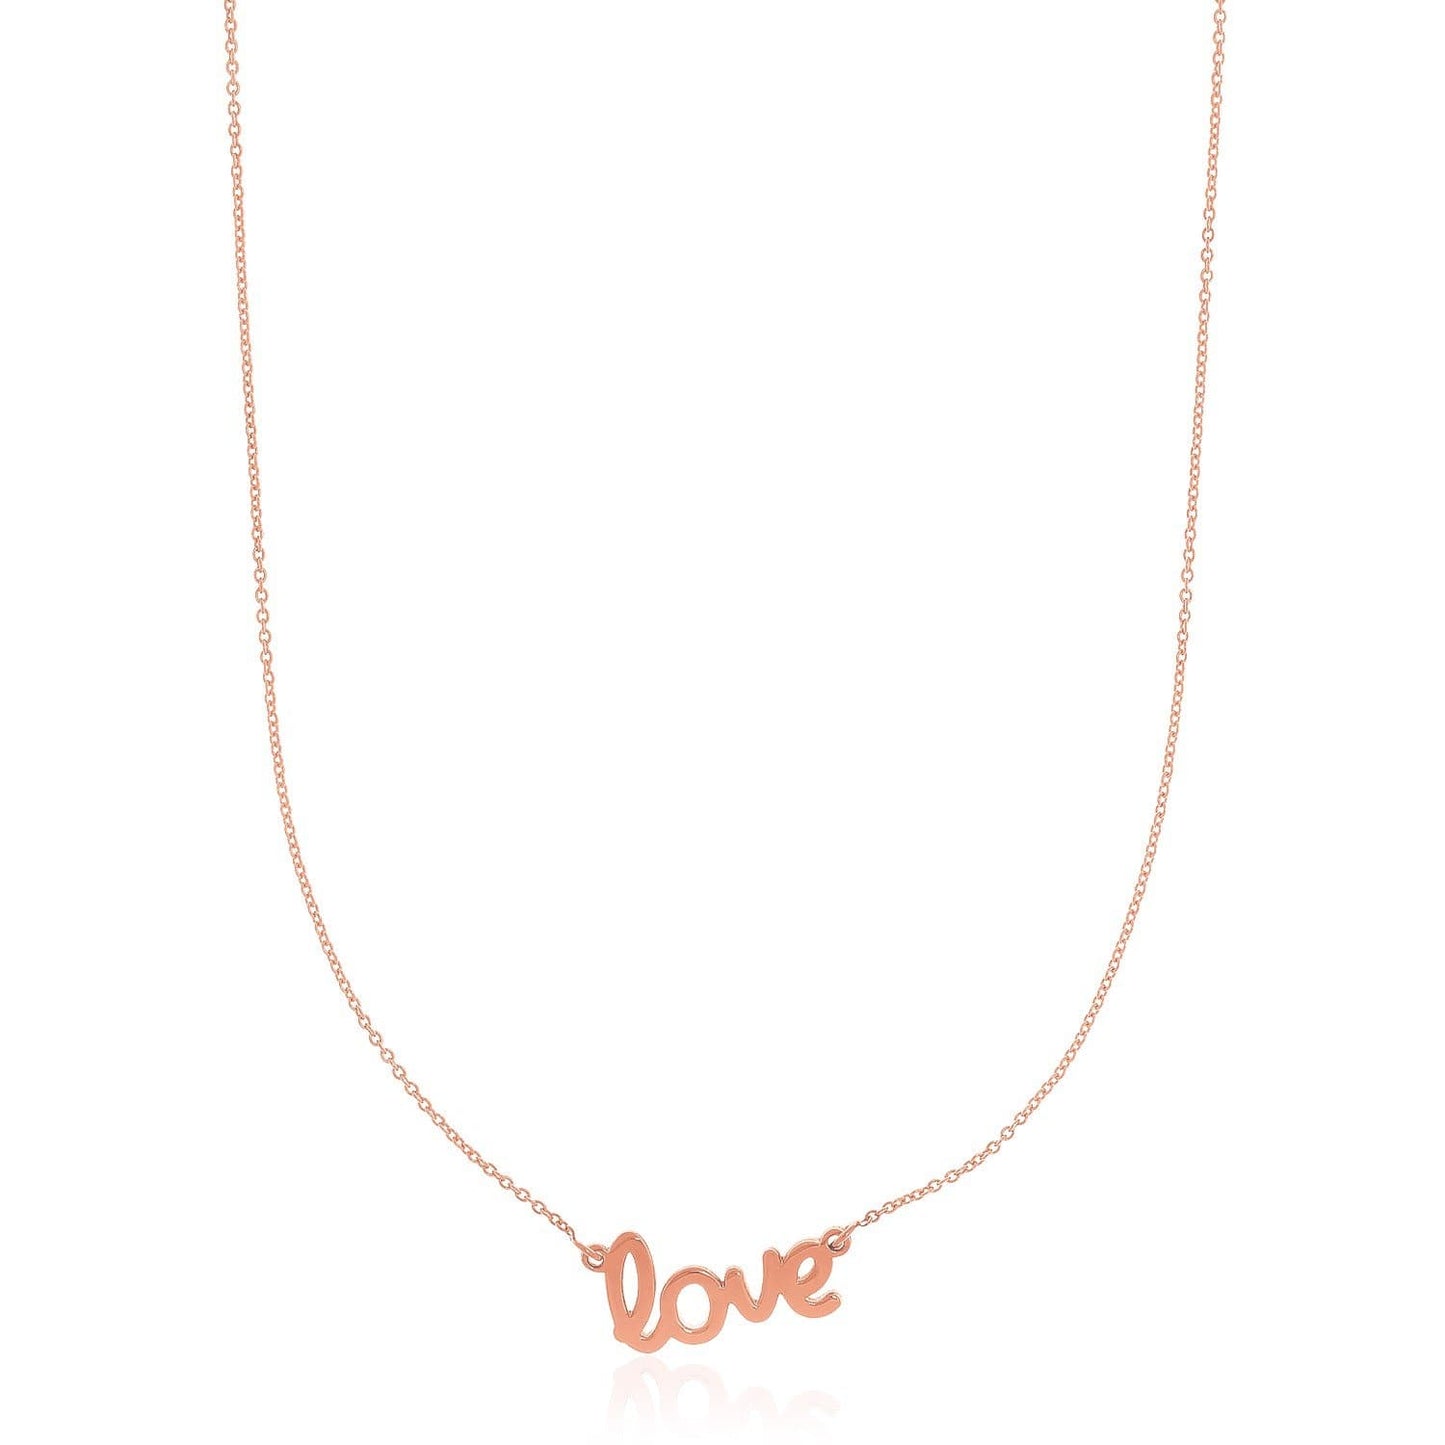 LOVE Necklace in 14k Rose Gold